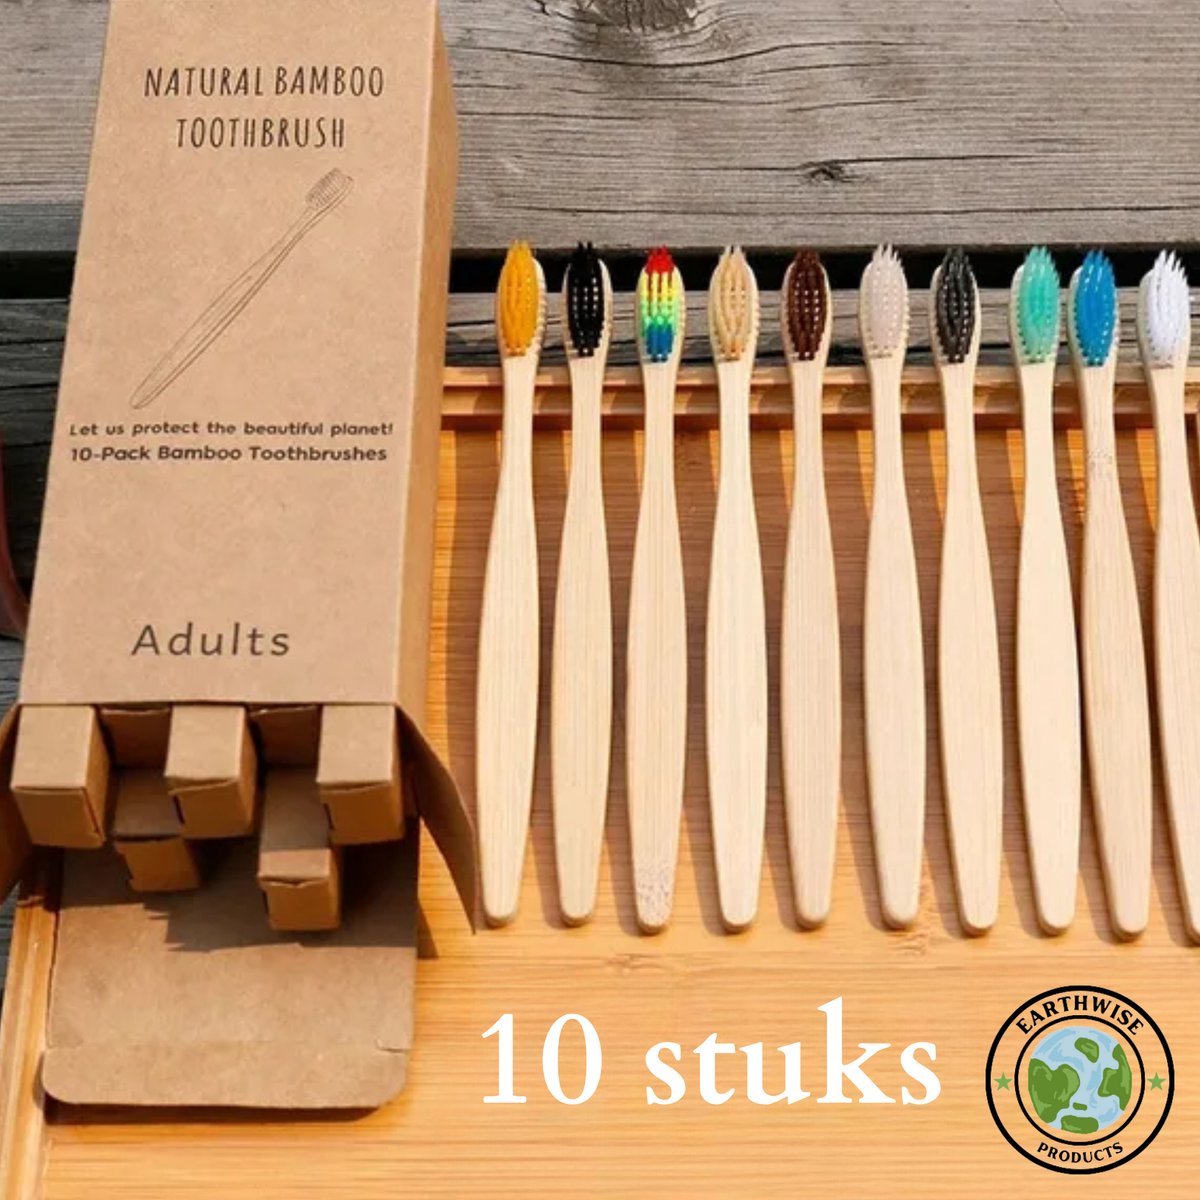 10 pack Bamboe Tandenborstels - Zero Waste - Vegan - Bamboo Toothbrushes - duurzaam